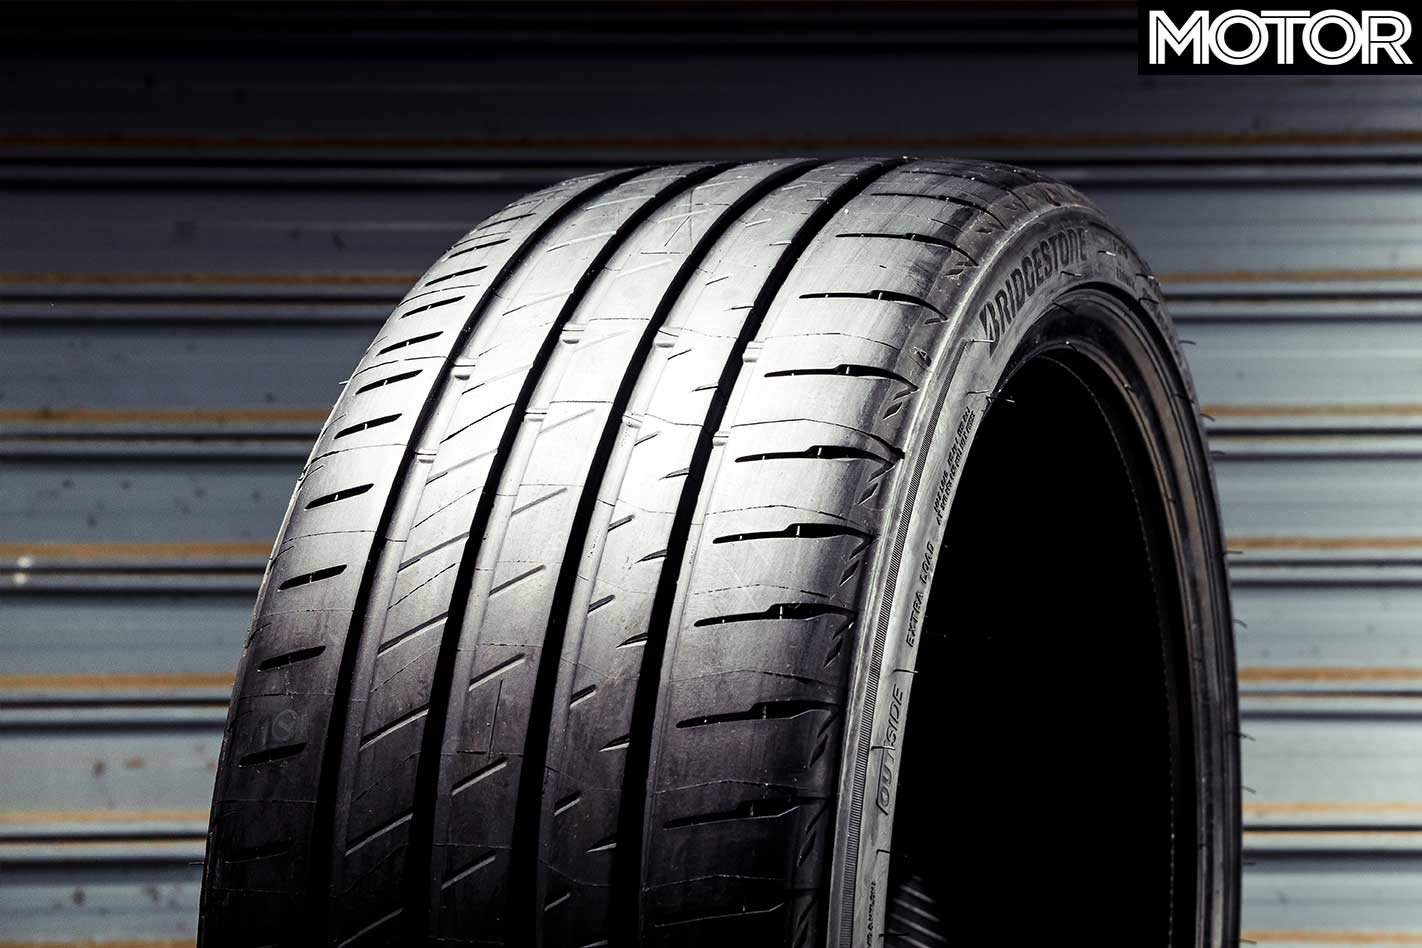 MOTOR-Tyre-Test-2019-Bridgestone-Potenza-S007A-review.jpg